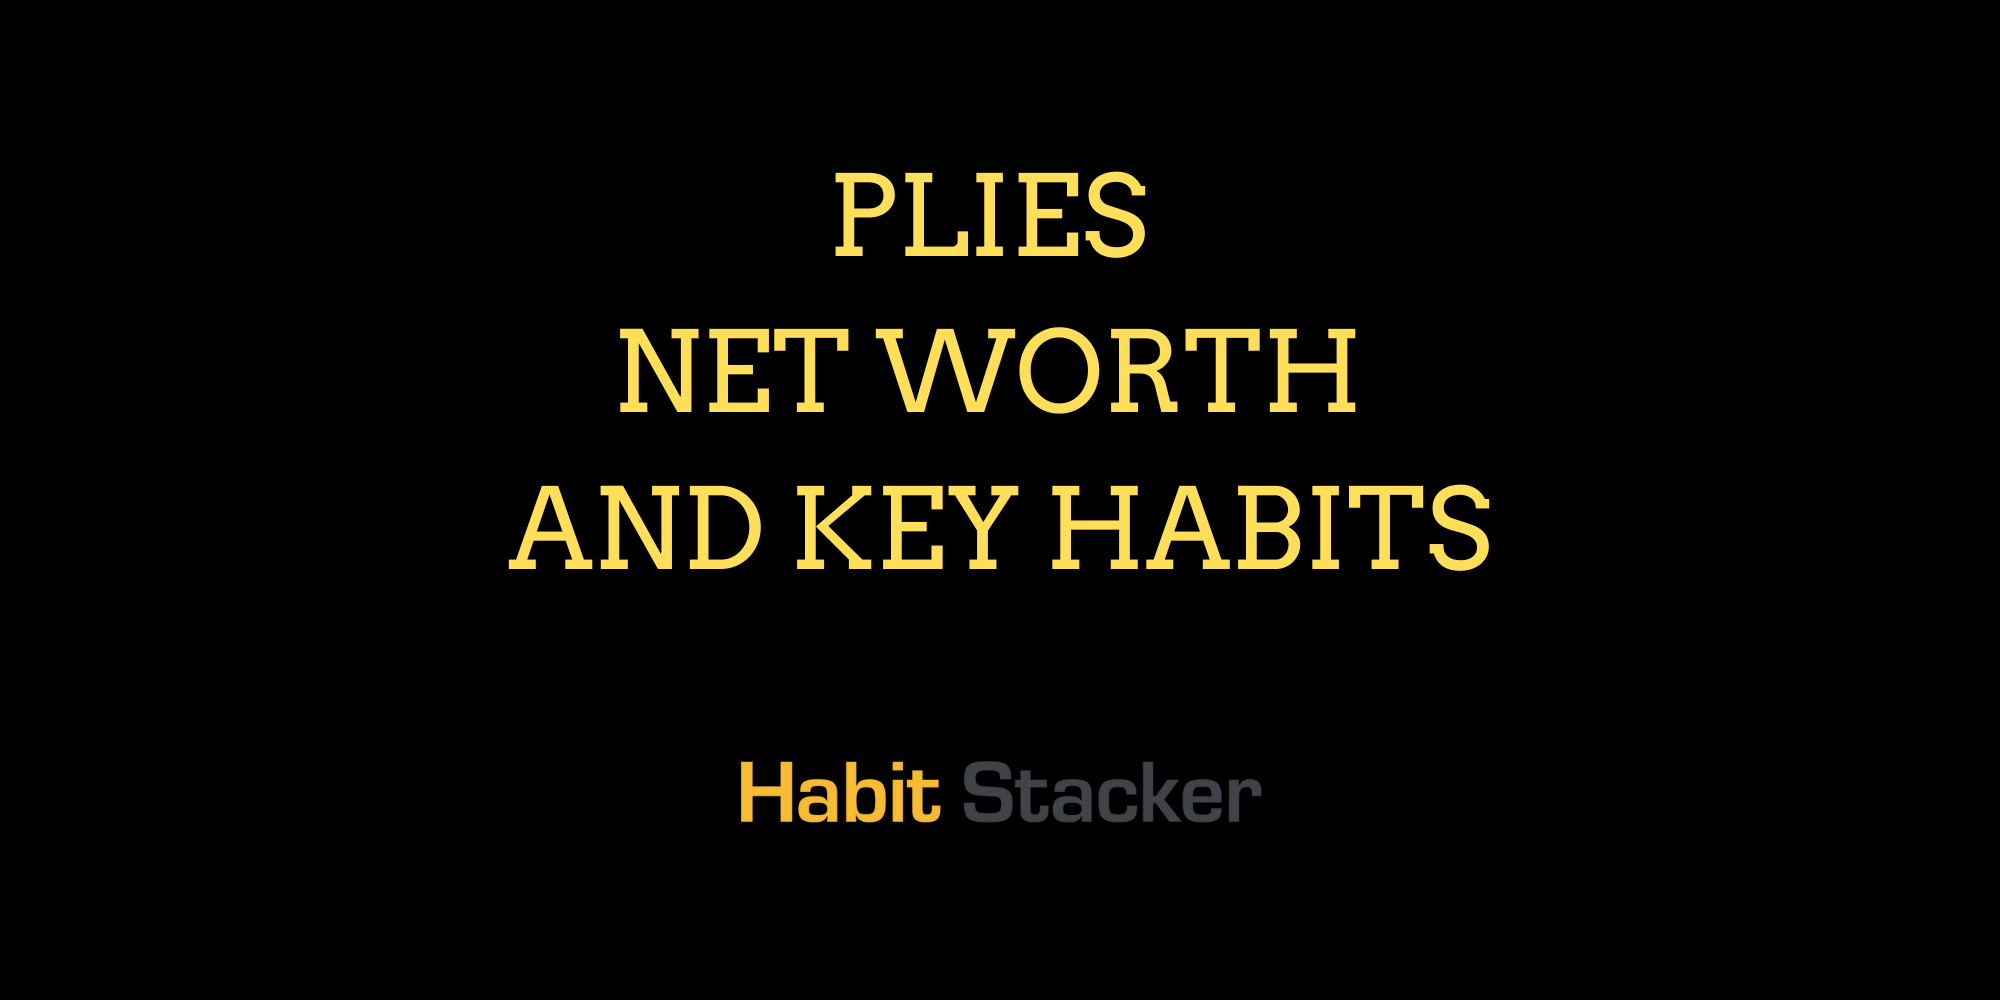 Plies Net Worth and Key Habits